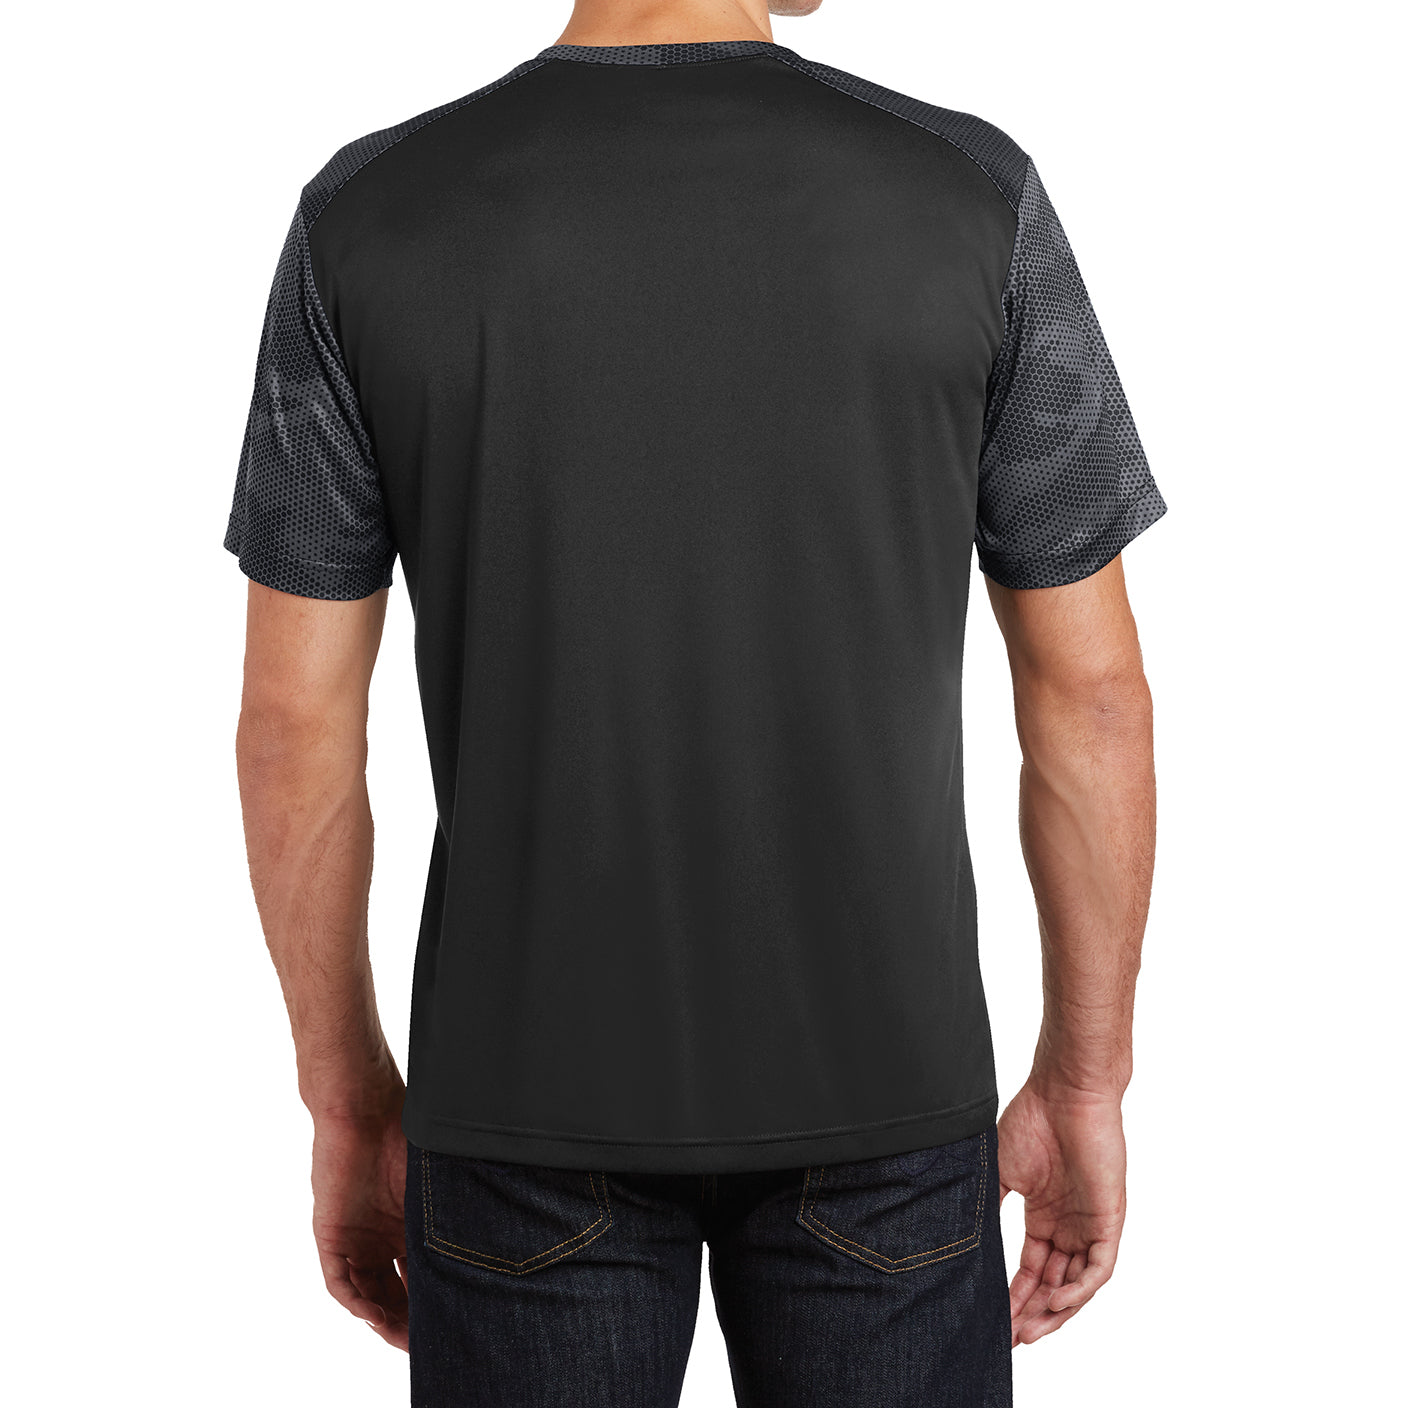 Men's CamoHex Colorblock Tee Shirt Black/ Iron Grey Back